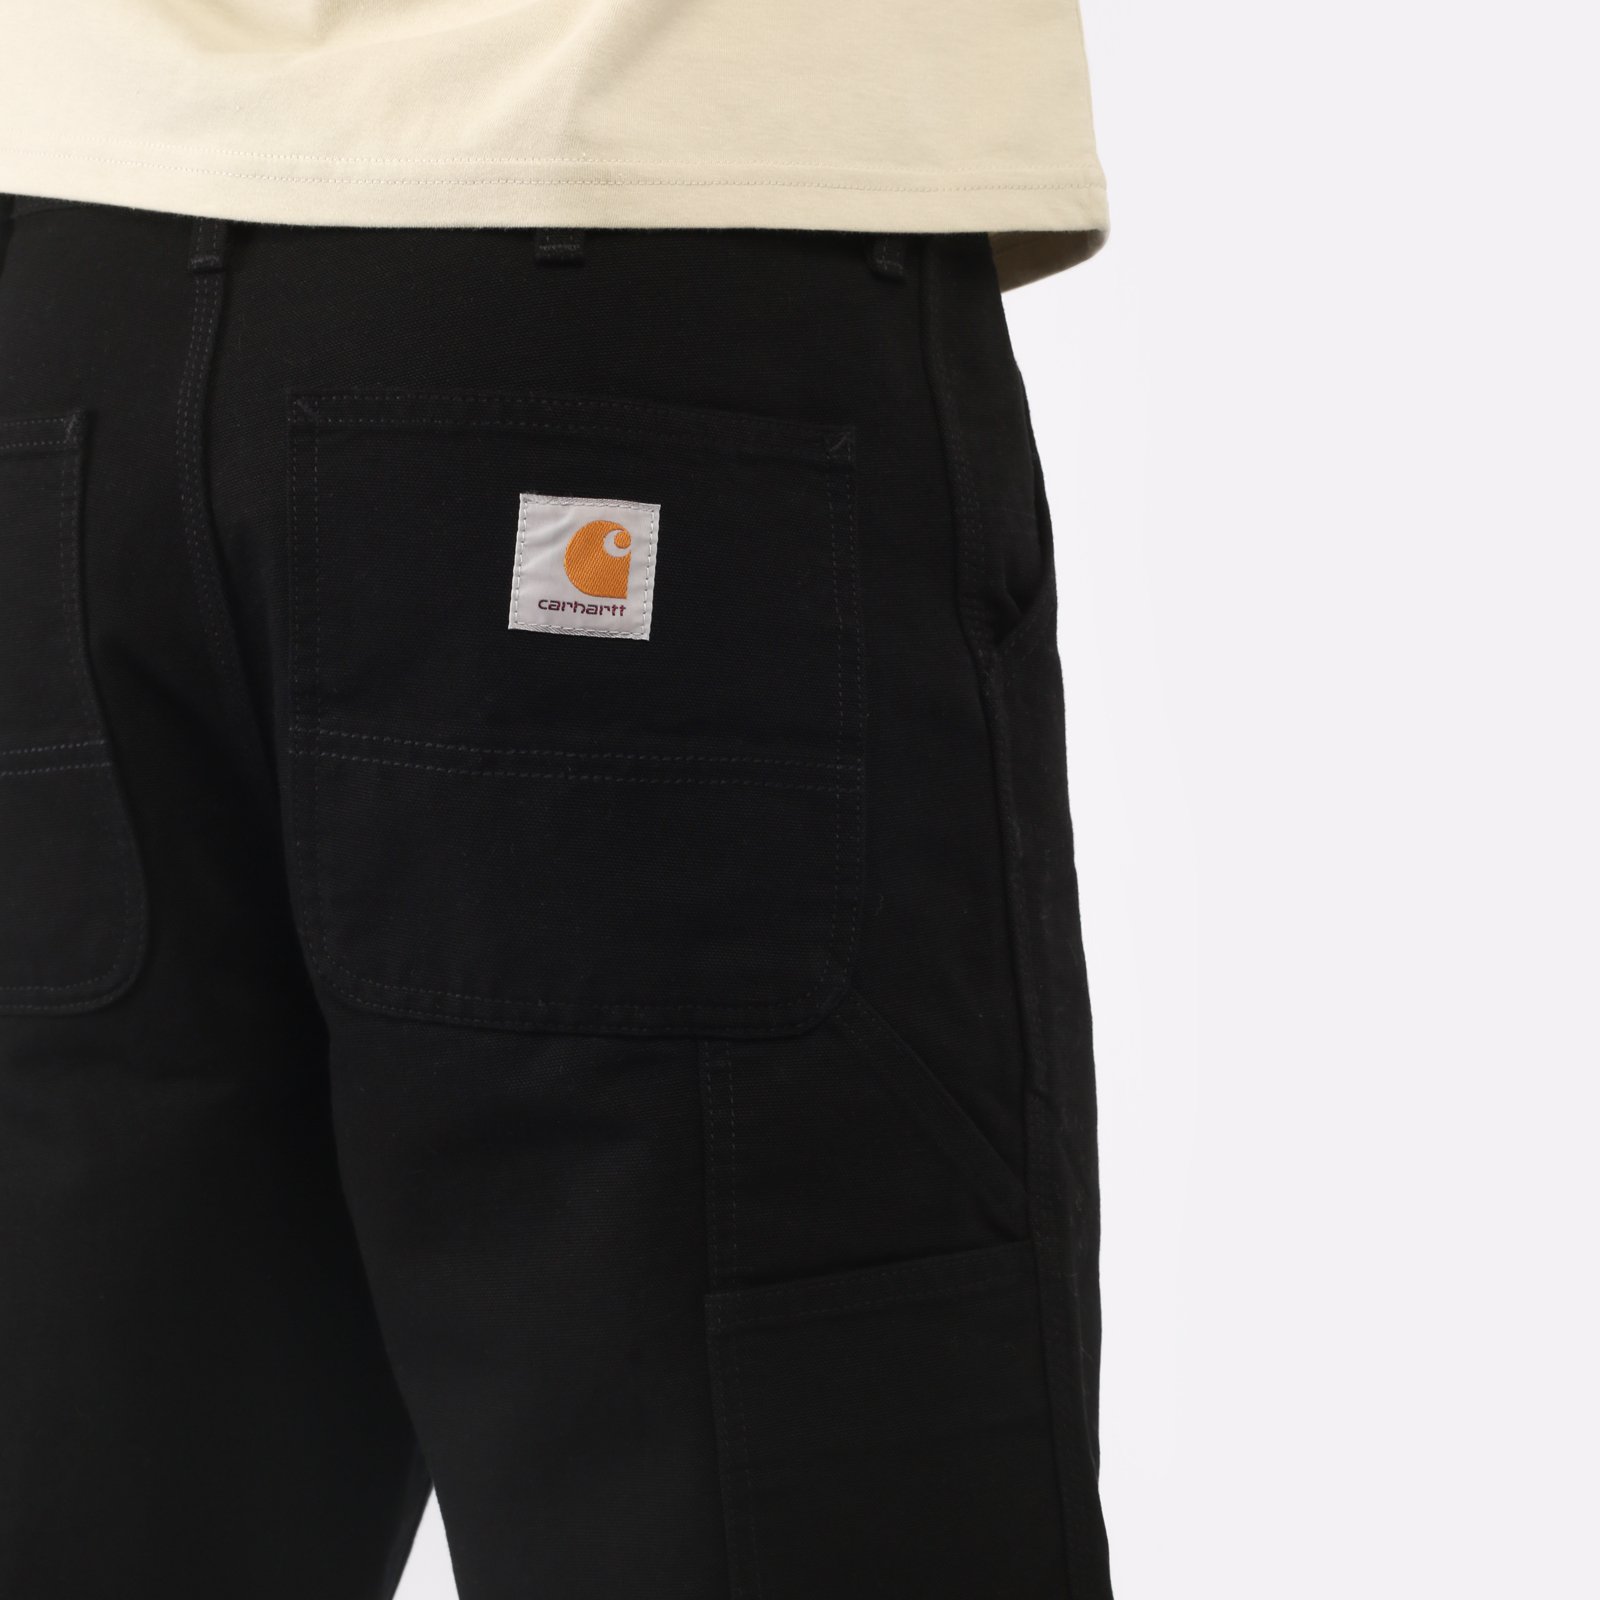 Мужские шорты Carhartt WIP Single Knee Short (I027942-black)  - цена, описание, фото 4